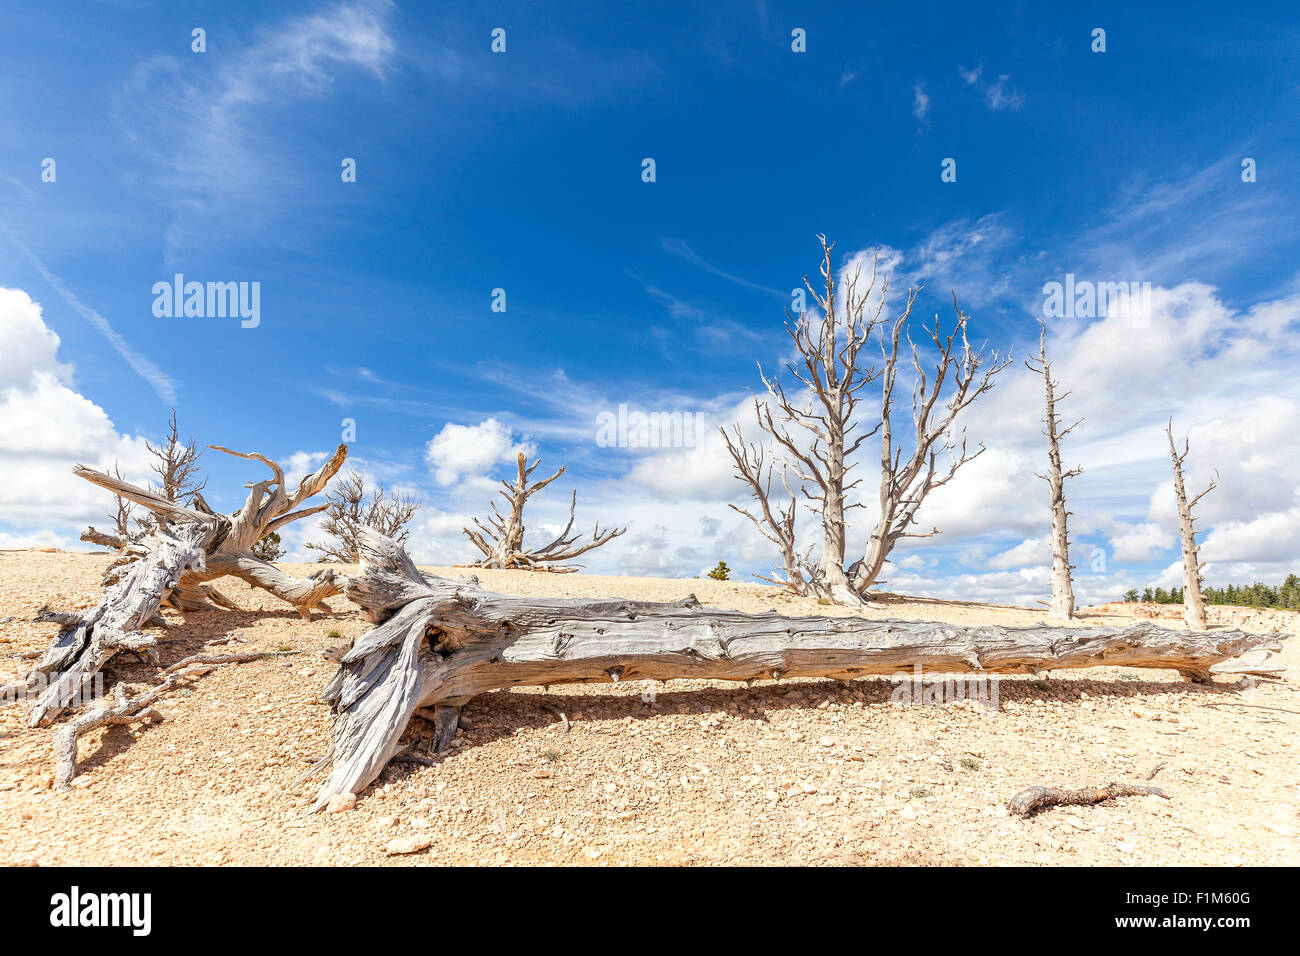 Dry trees on sand dunes, Death Valley desert, USA. Stock Photo